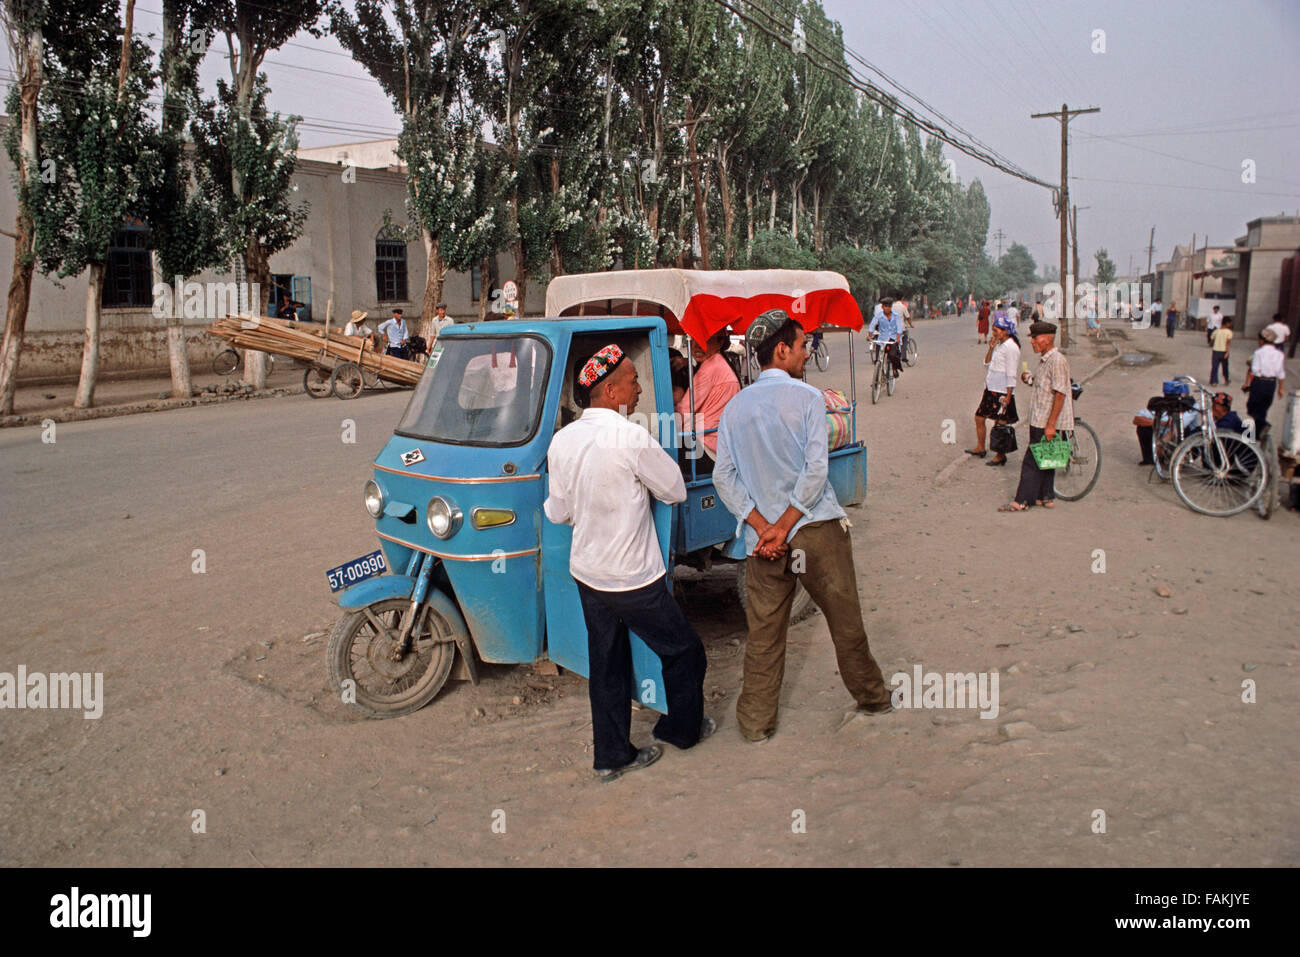 Uyghur men next to motorbike Taxi in Turpan, Xinjiang Province, China Stock Photo